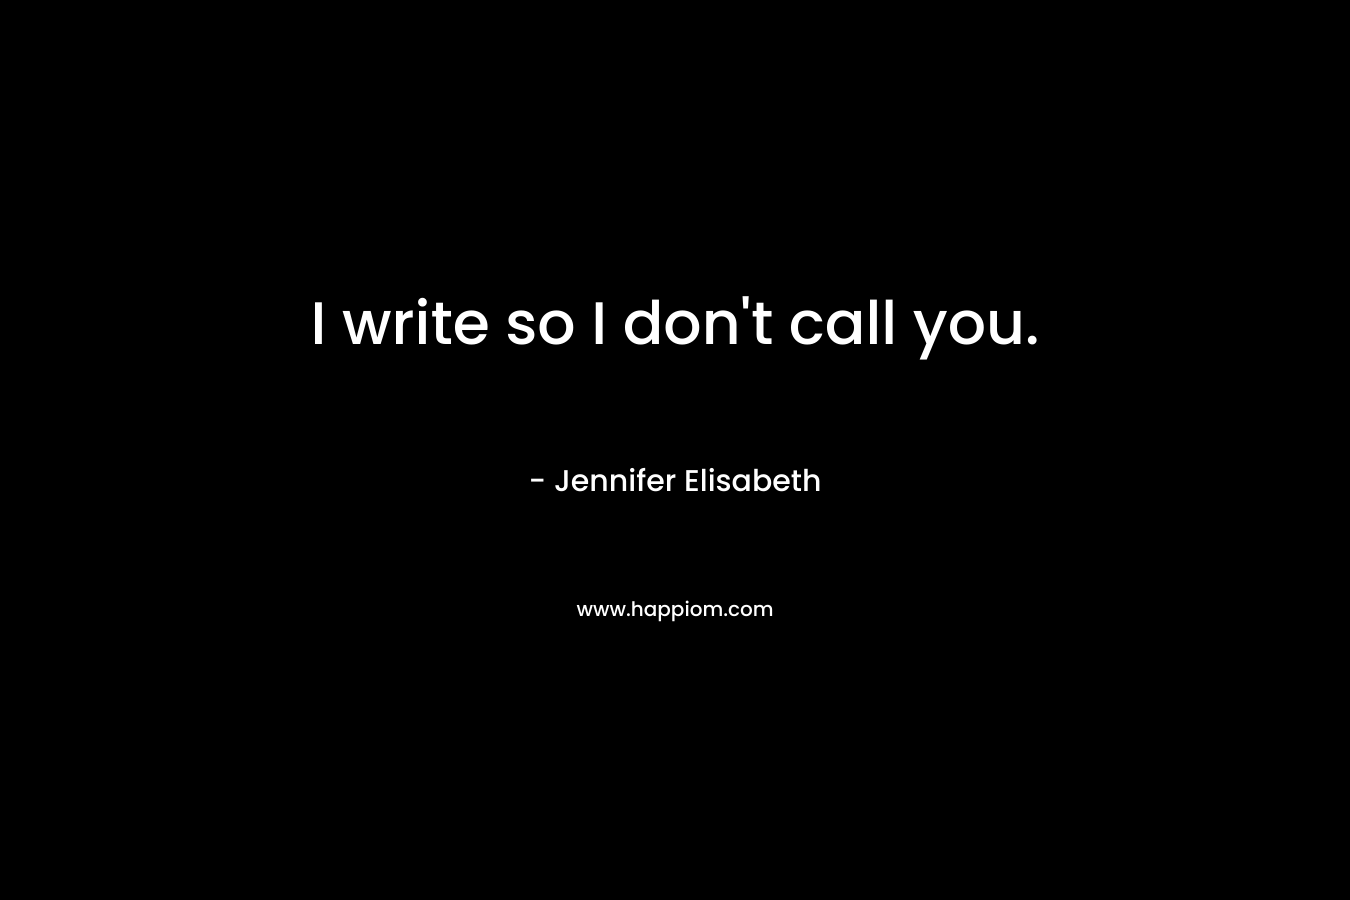 I write so I don't call you.